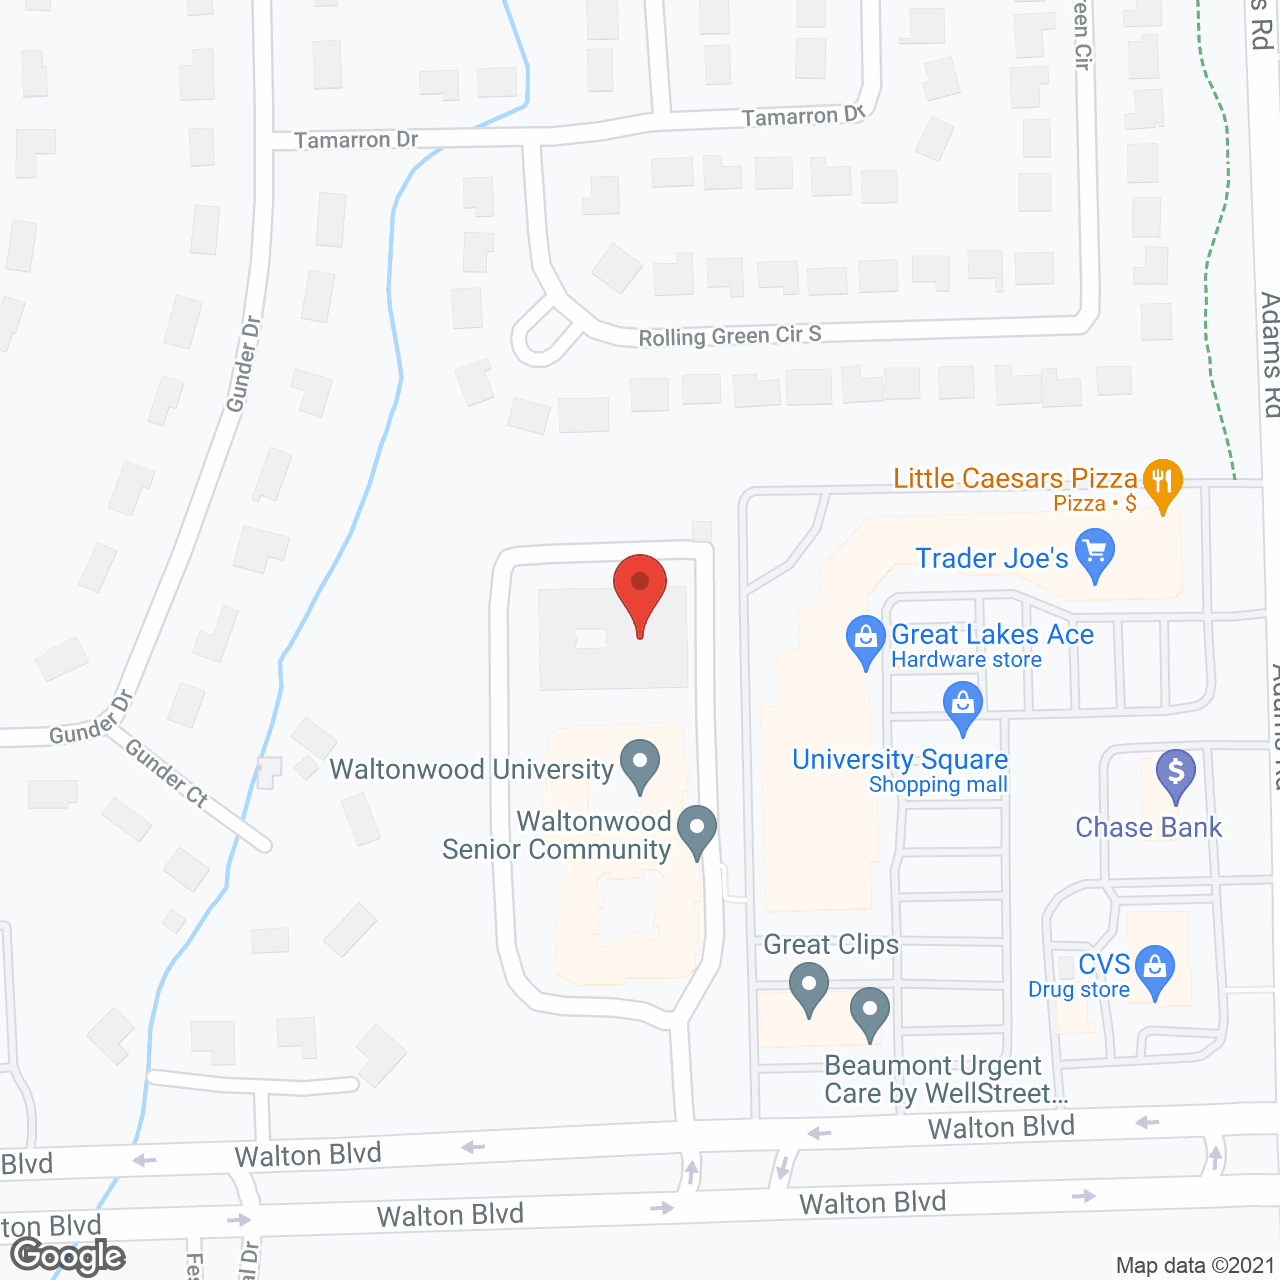 Waltonwood Senior Community in google map